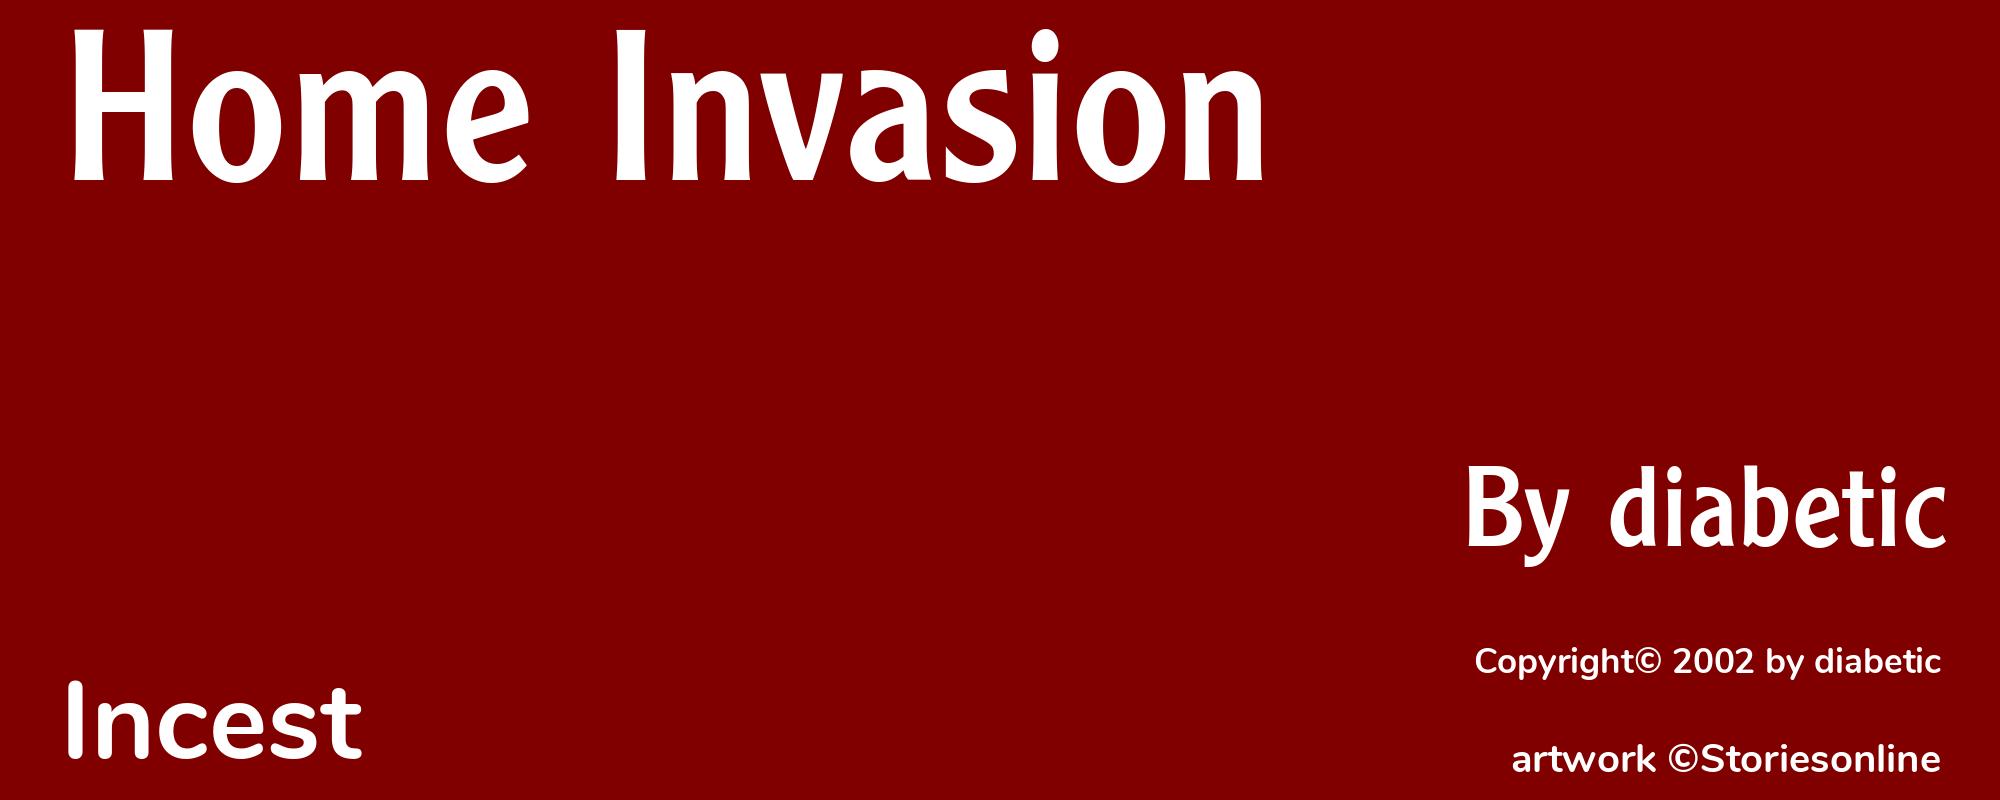 Home Invasion - Cover